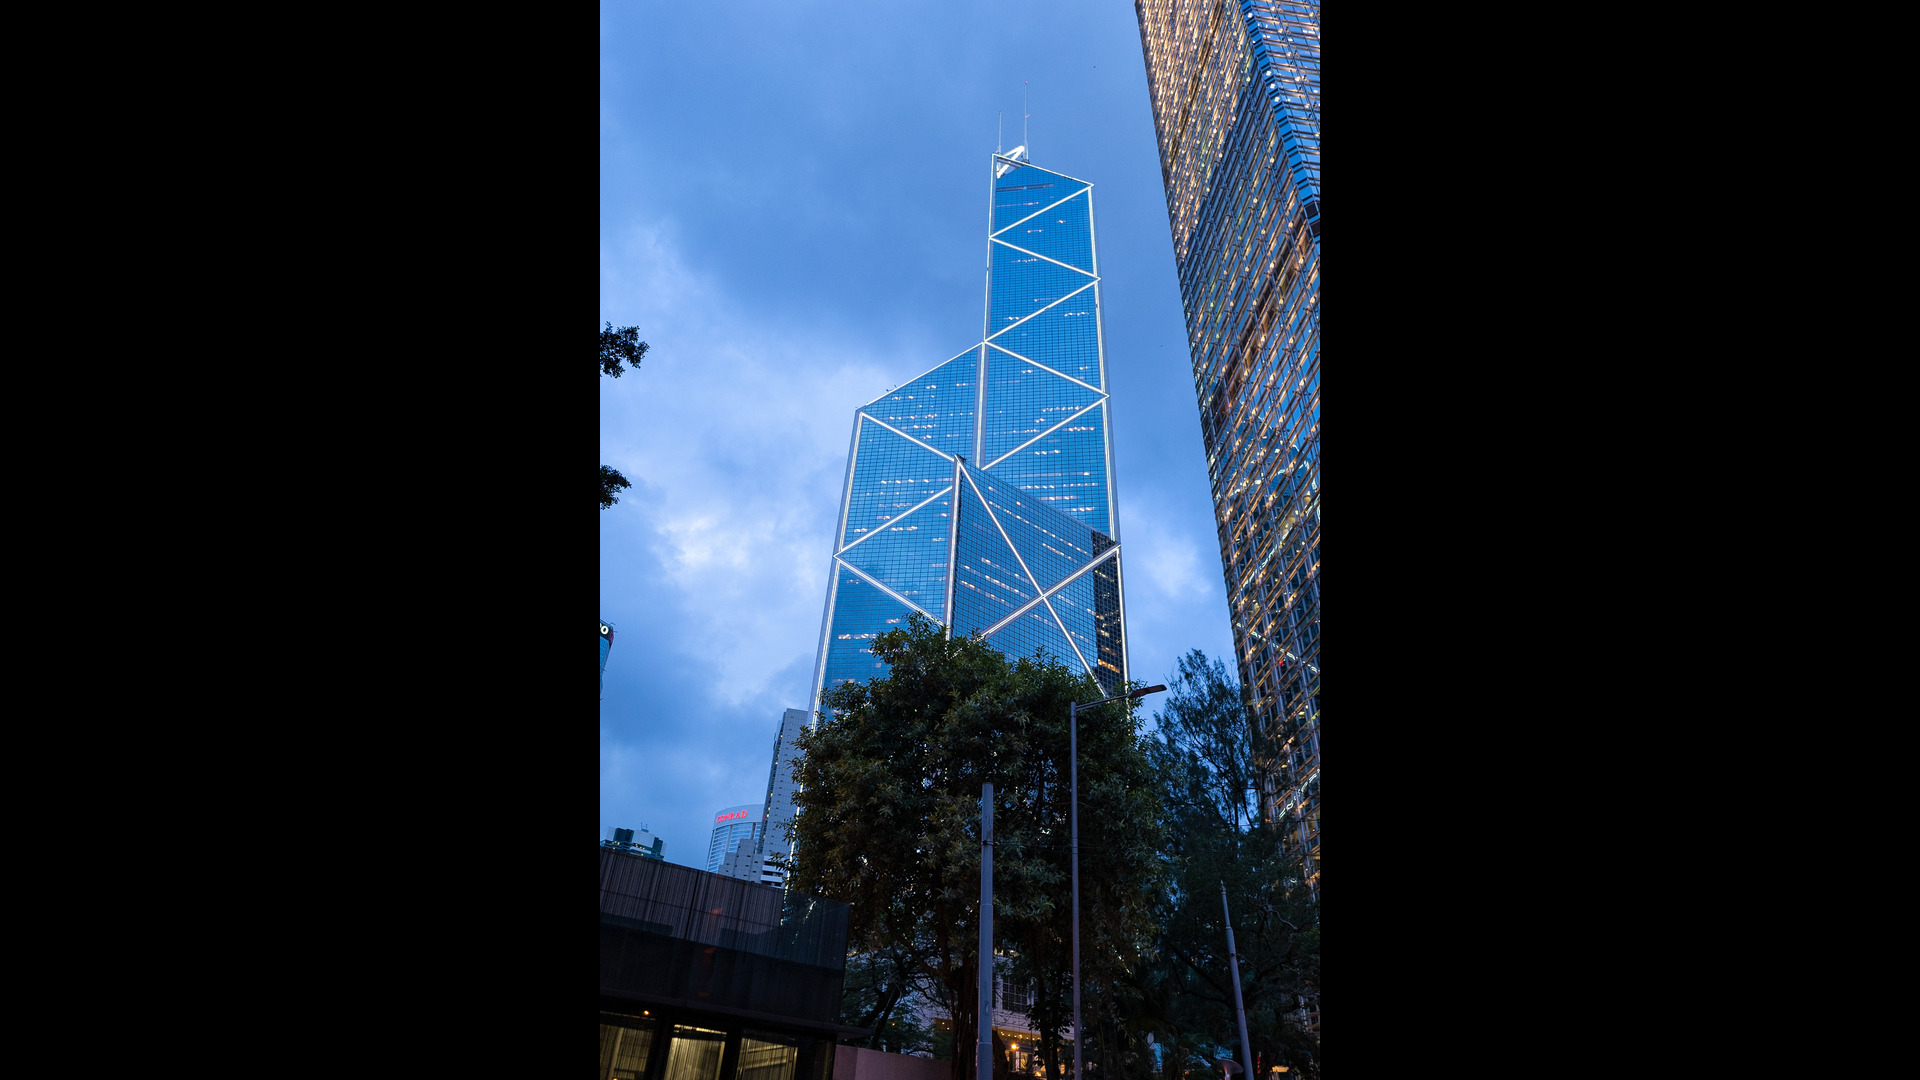 BANK OF CHINA TOWER - The BOC Tower: The Most Iconic Landmark of Hong Kong